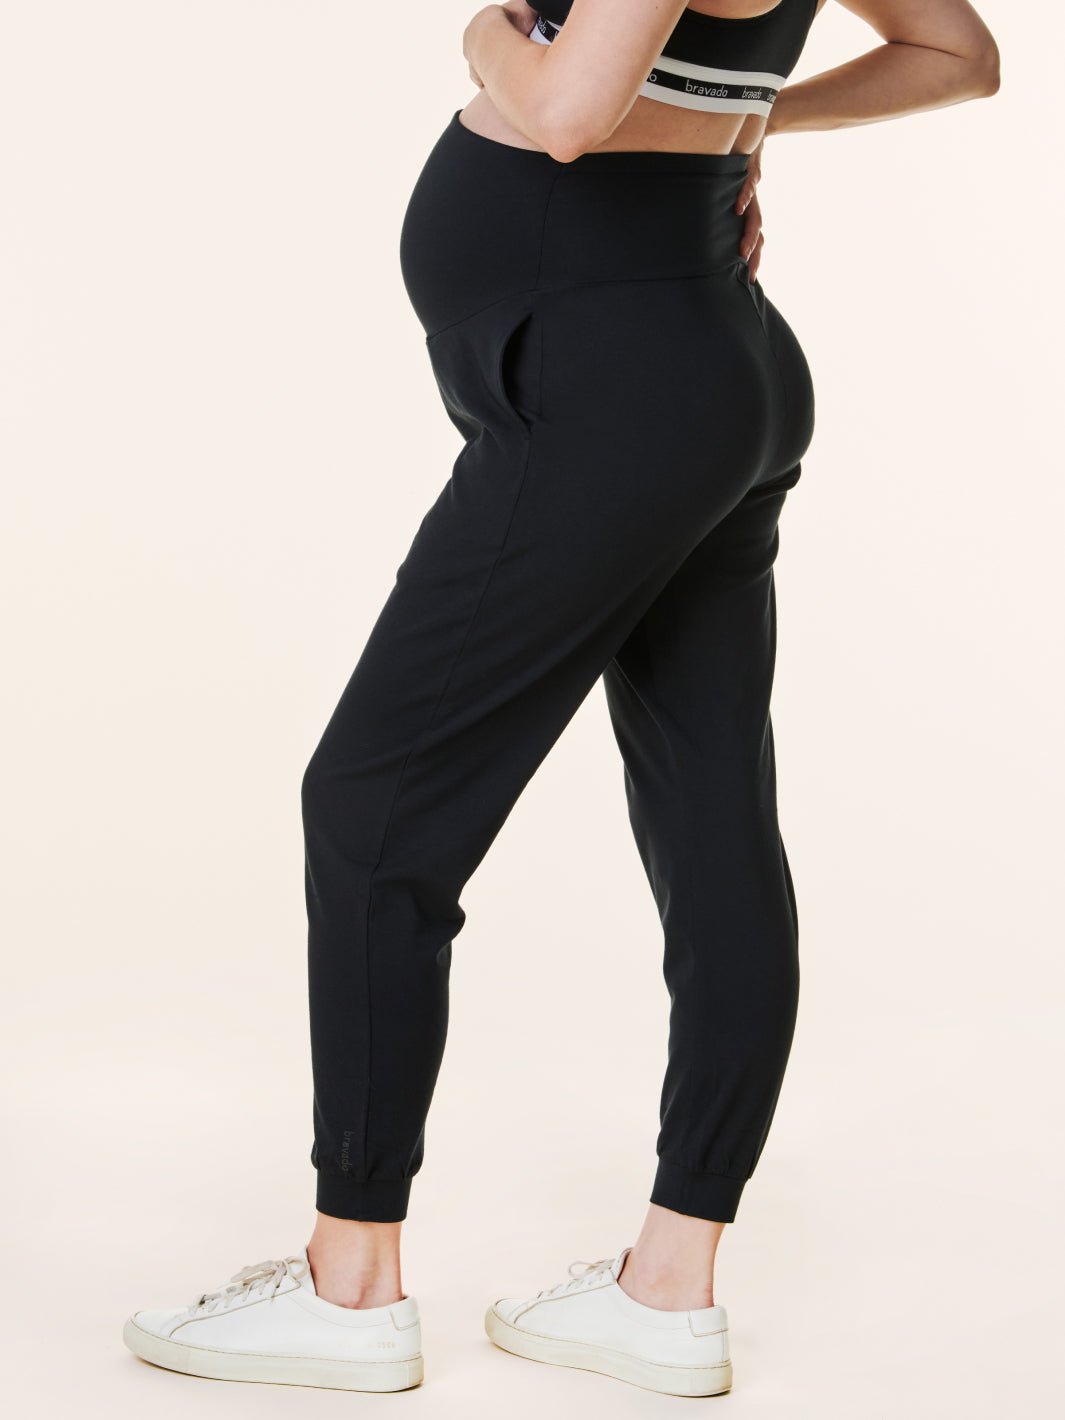 Maternity Jogger Pants - Buy Pregnancy Track Pants Online